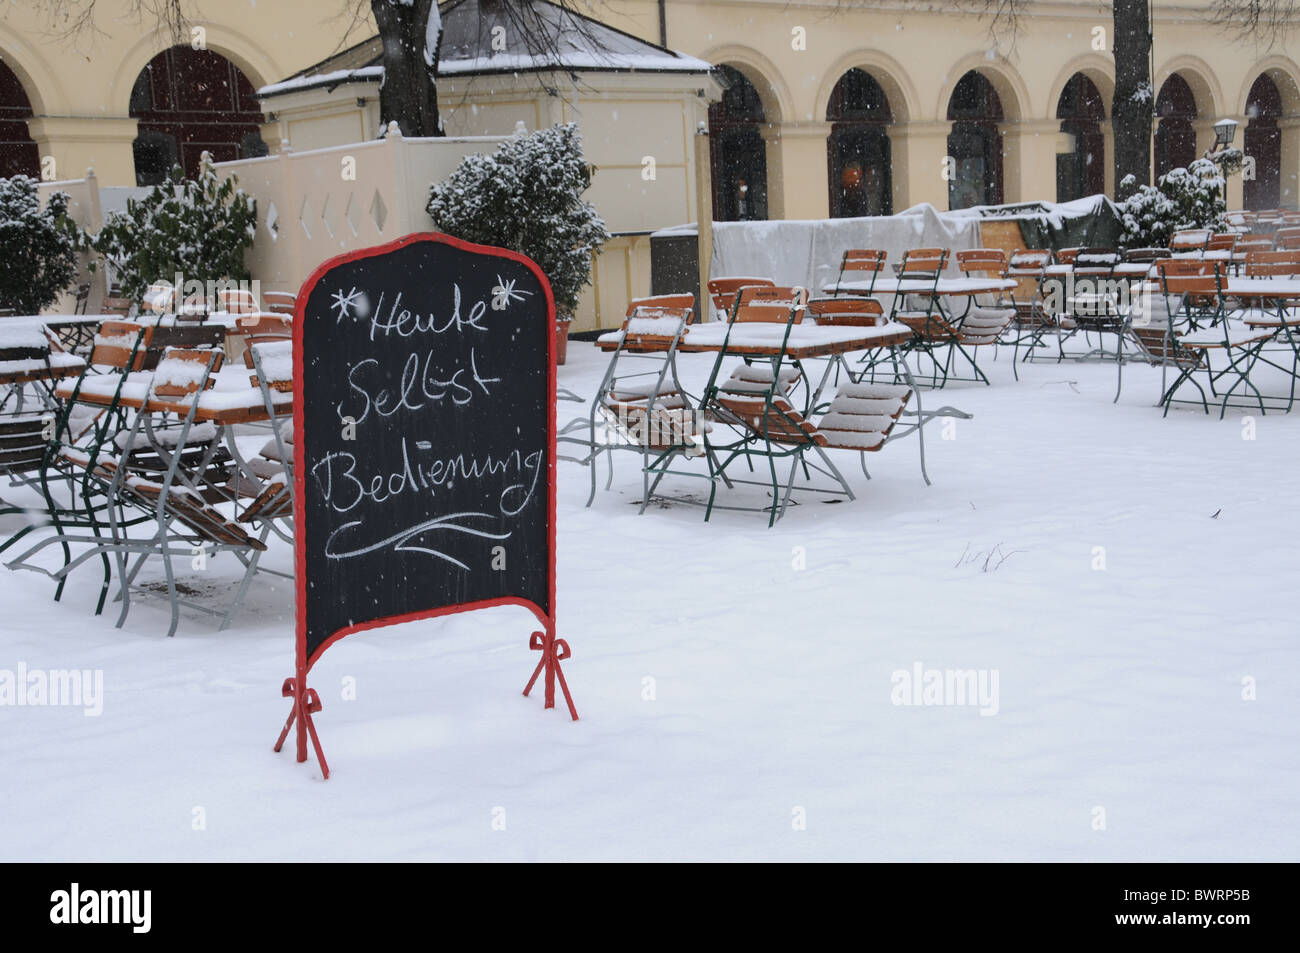 Snowy Street Cafe in Munich Stock Photo